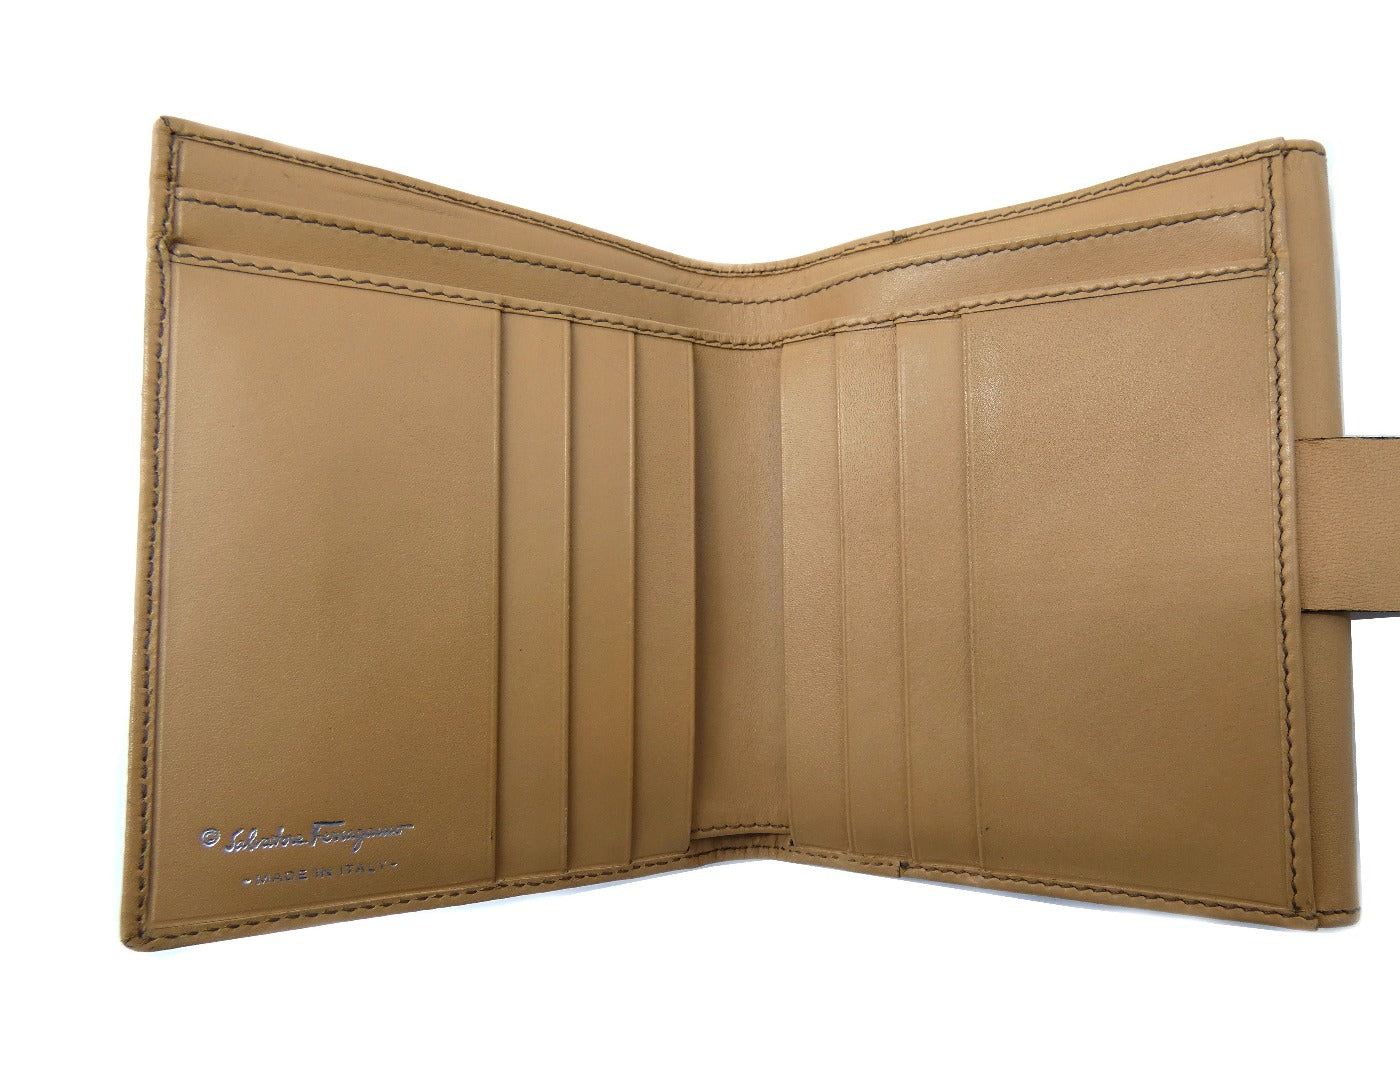 Ferragamo Men's Gancini Leather Wallet